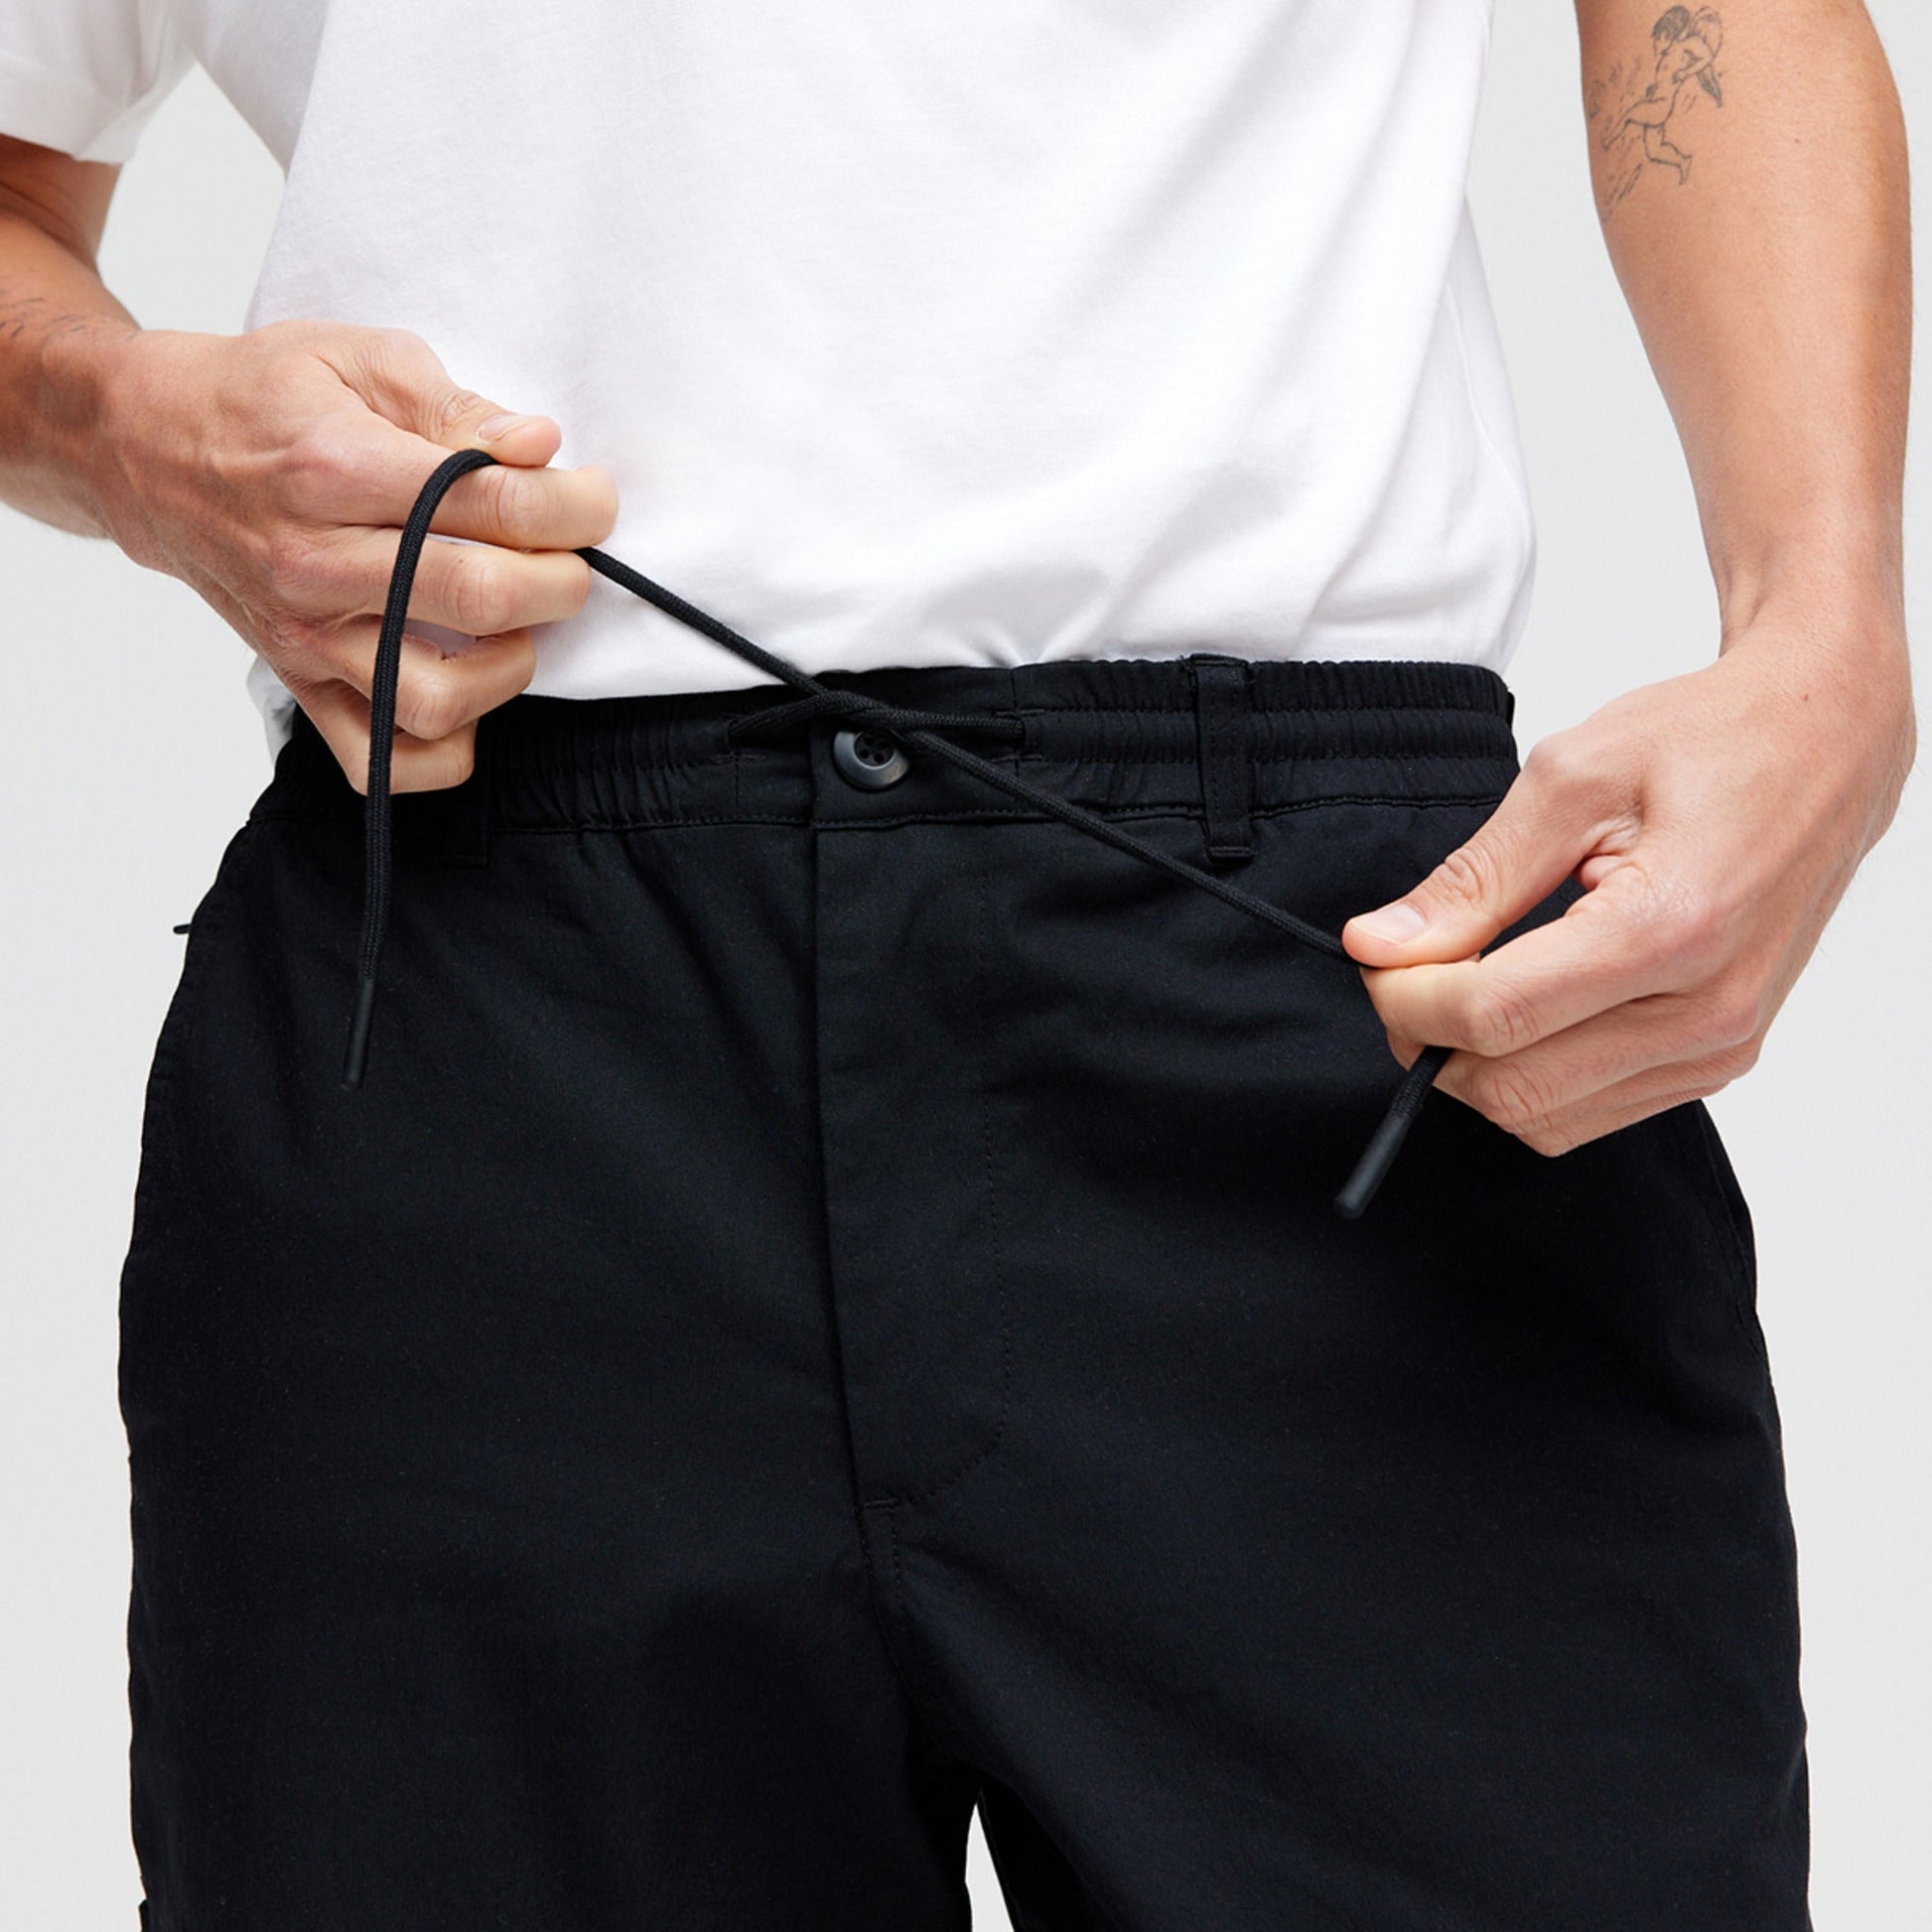 Stance Compound Pant With Freshtek True Black |model